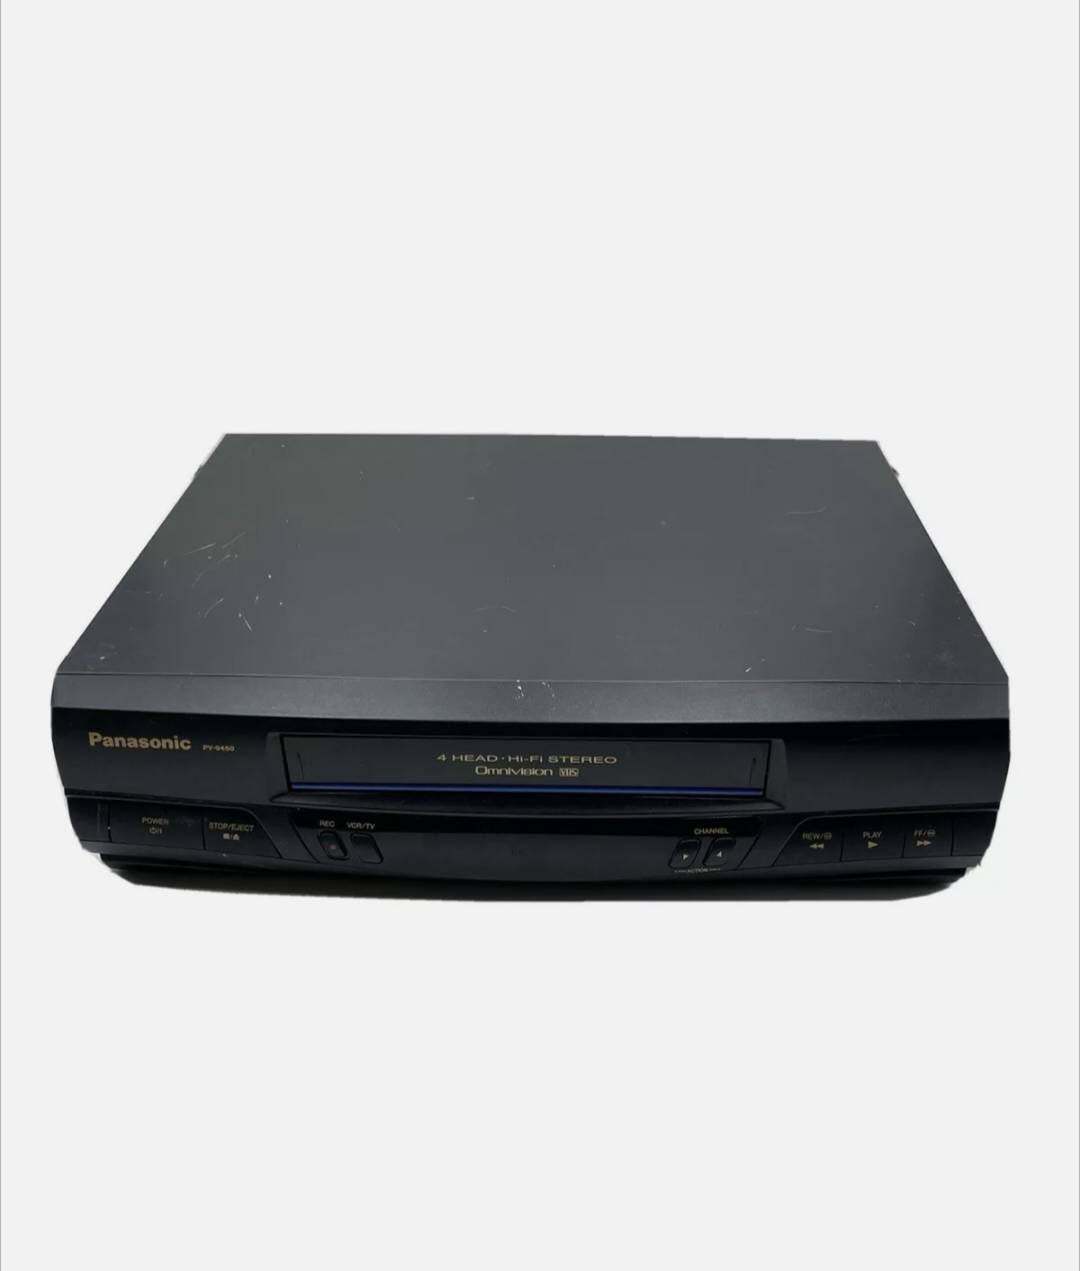 Panasonic PV-9450 4 Head Video Cassette Recorder Omnivision VHS Player VCR - $180.00